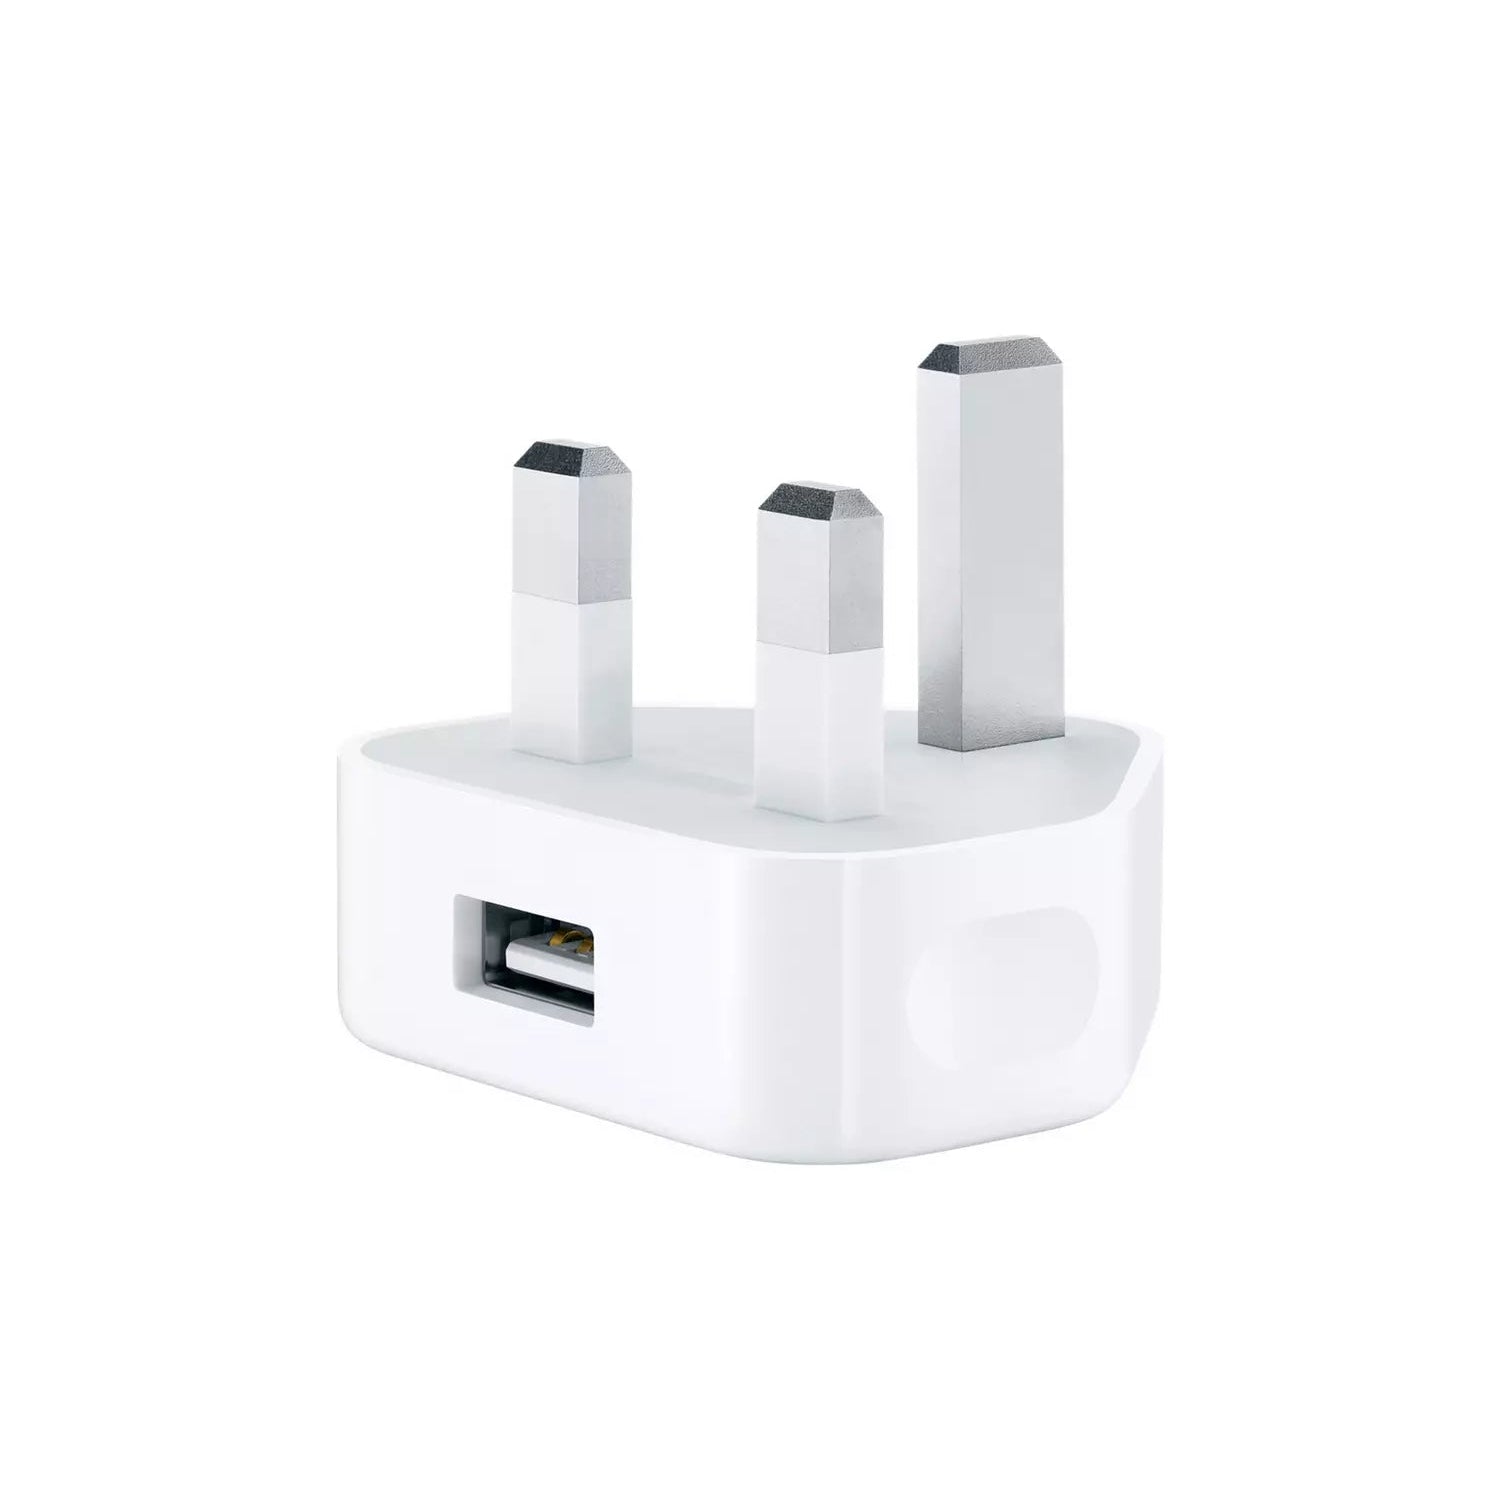 Apple 5W USB Power Adapter - MGN43B/A